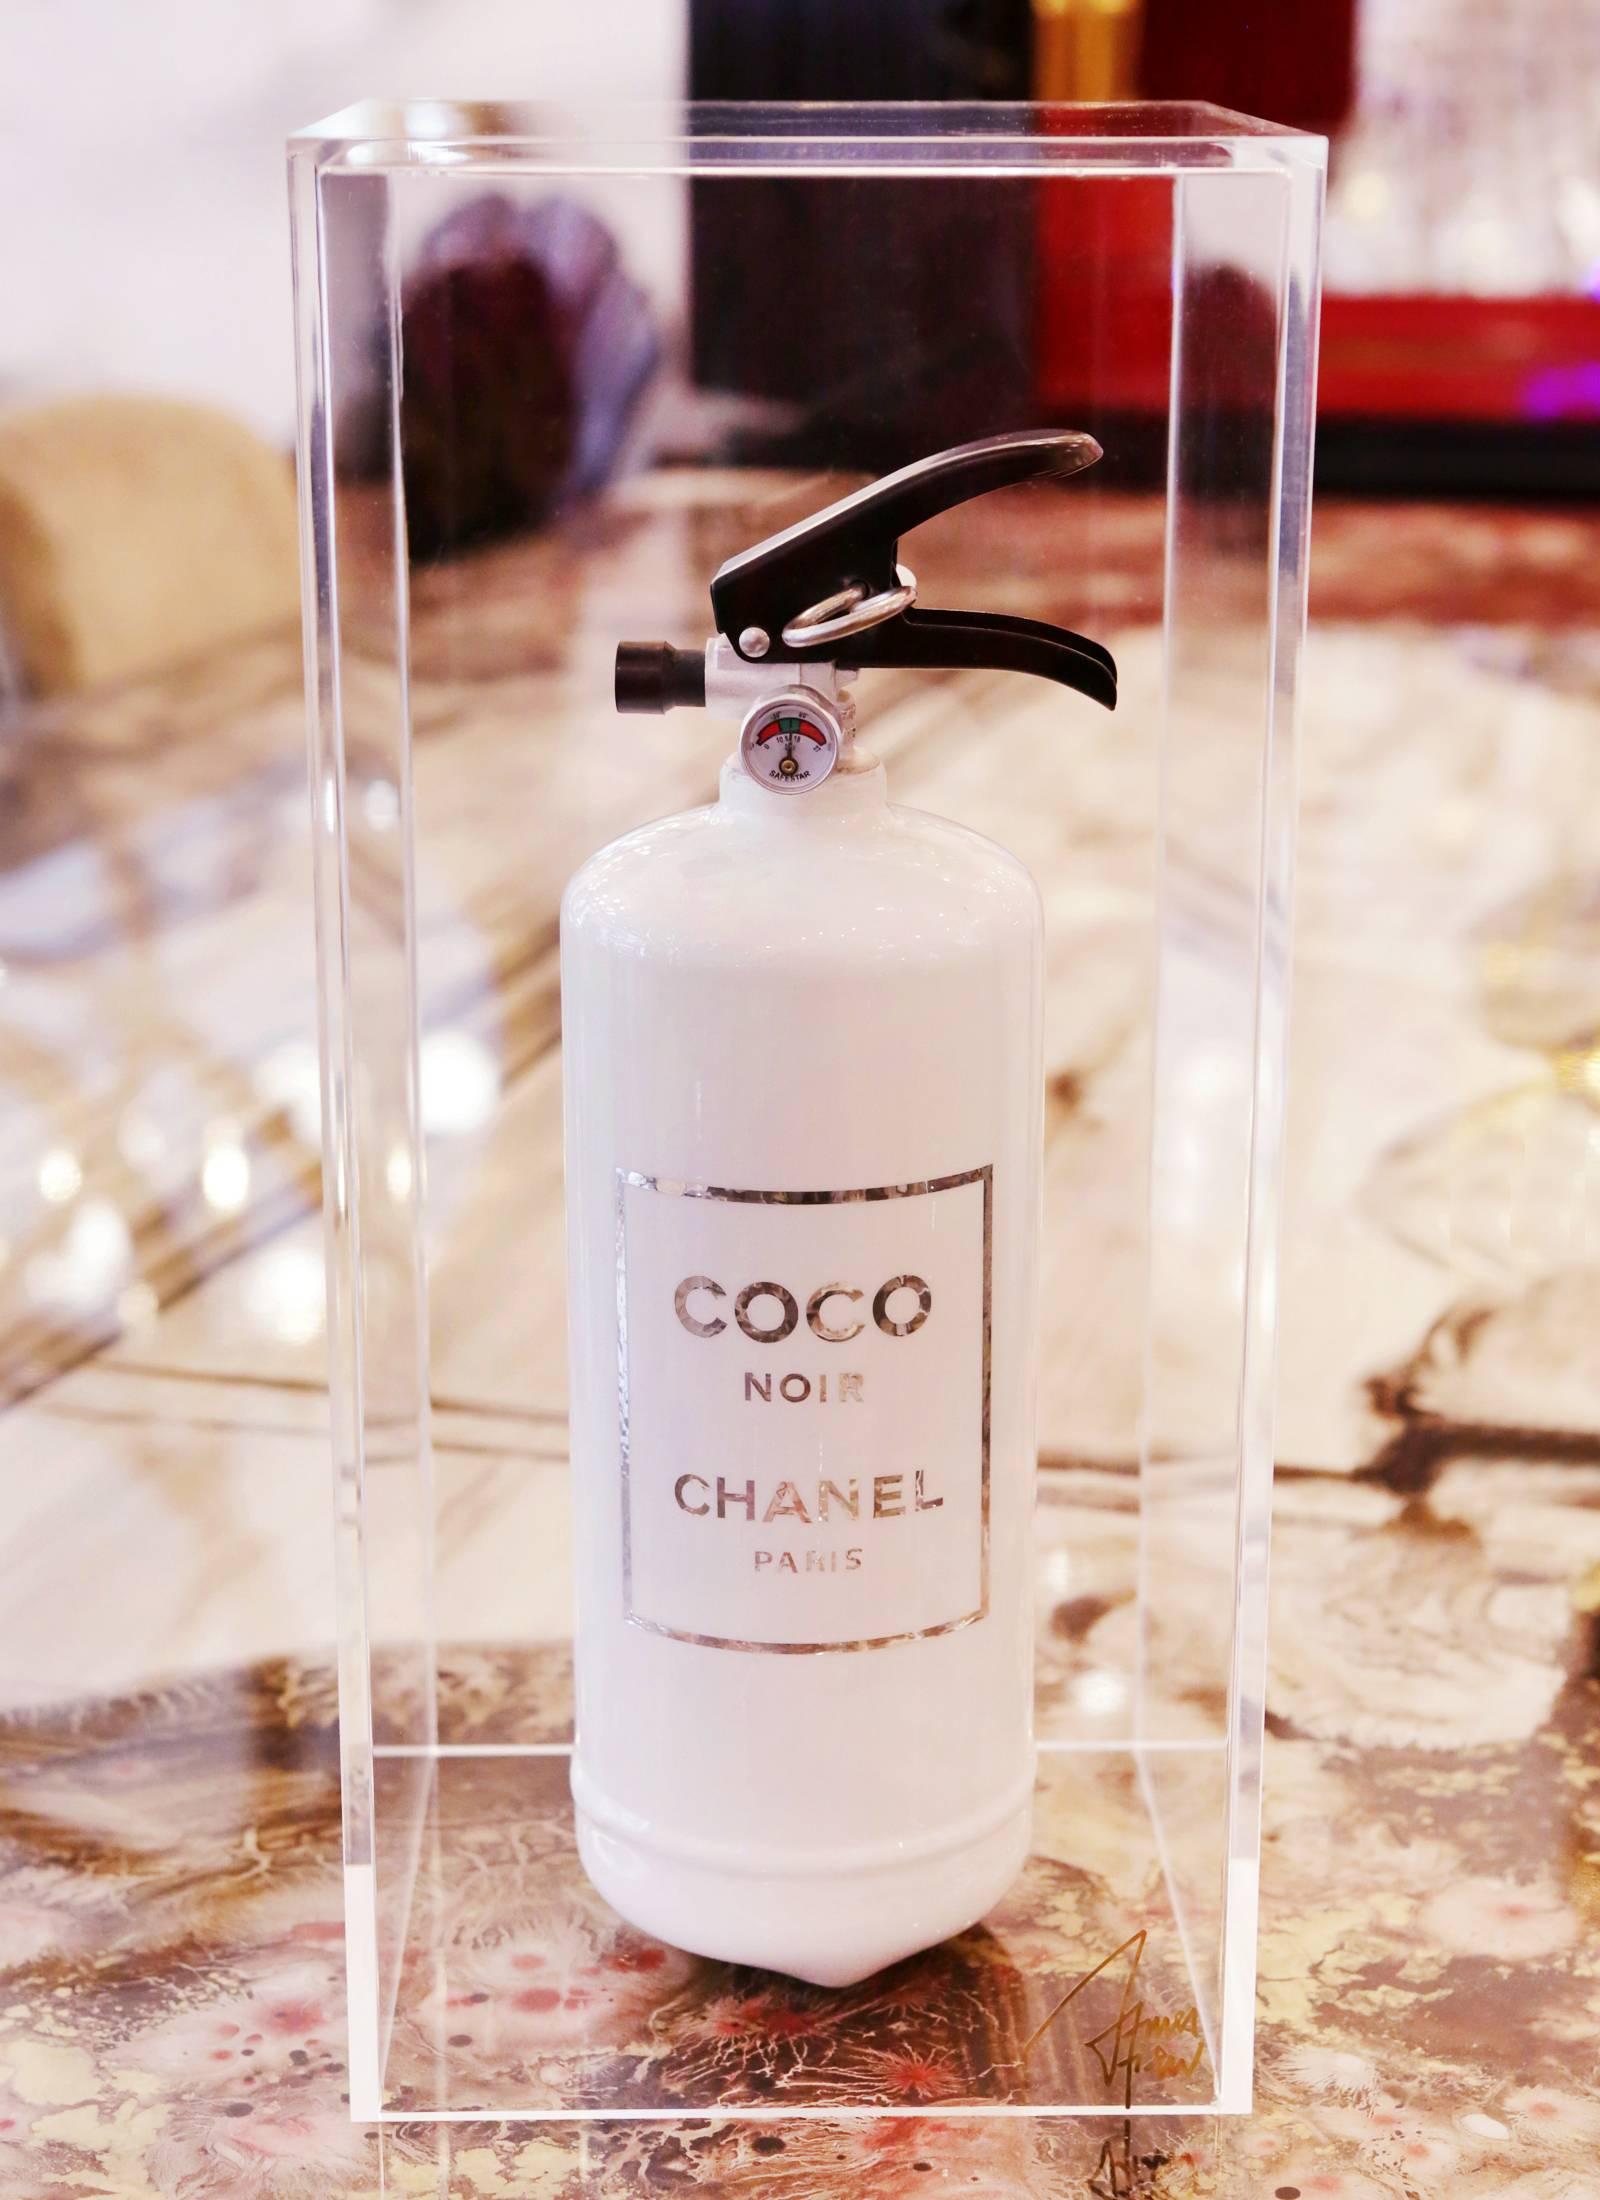 Extinguisher coco noir Chanel
Limited edition of 16 pieces. Exceptional pieces.
Under plexiglass box.
Measures: Box: L 20 x D 20 x H 42.5cm.
Extinguisher: L 10.5 x D 10. 5 x H 35.5cm.